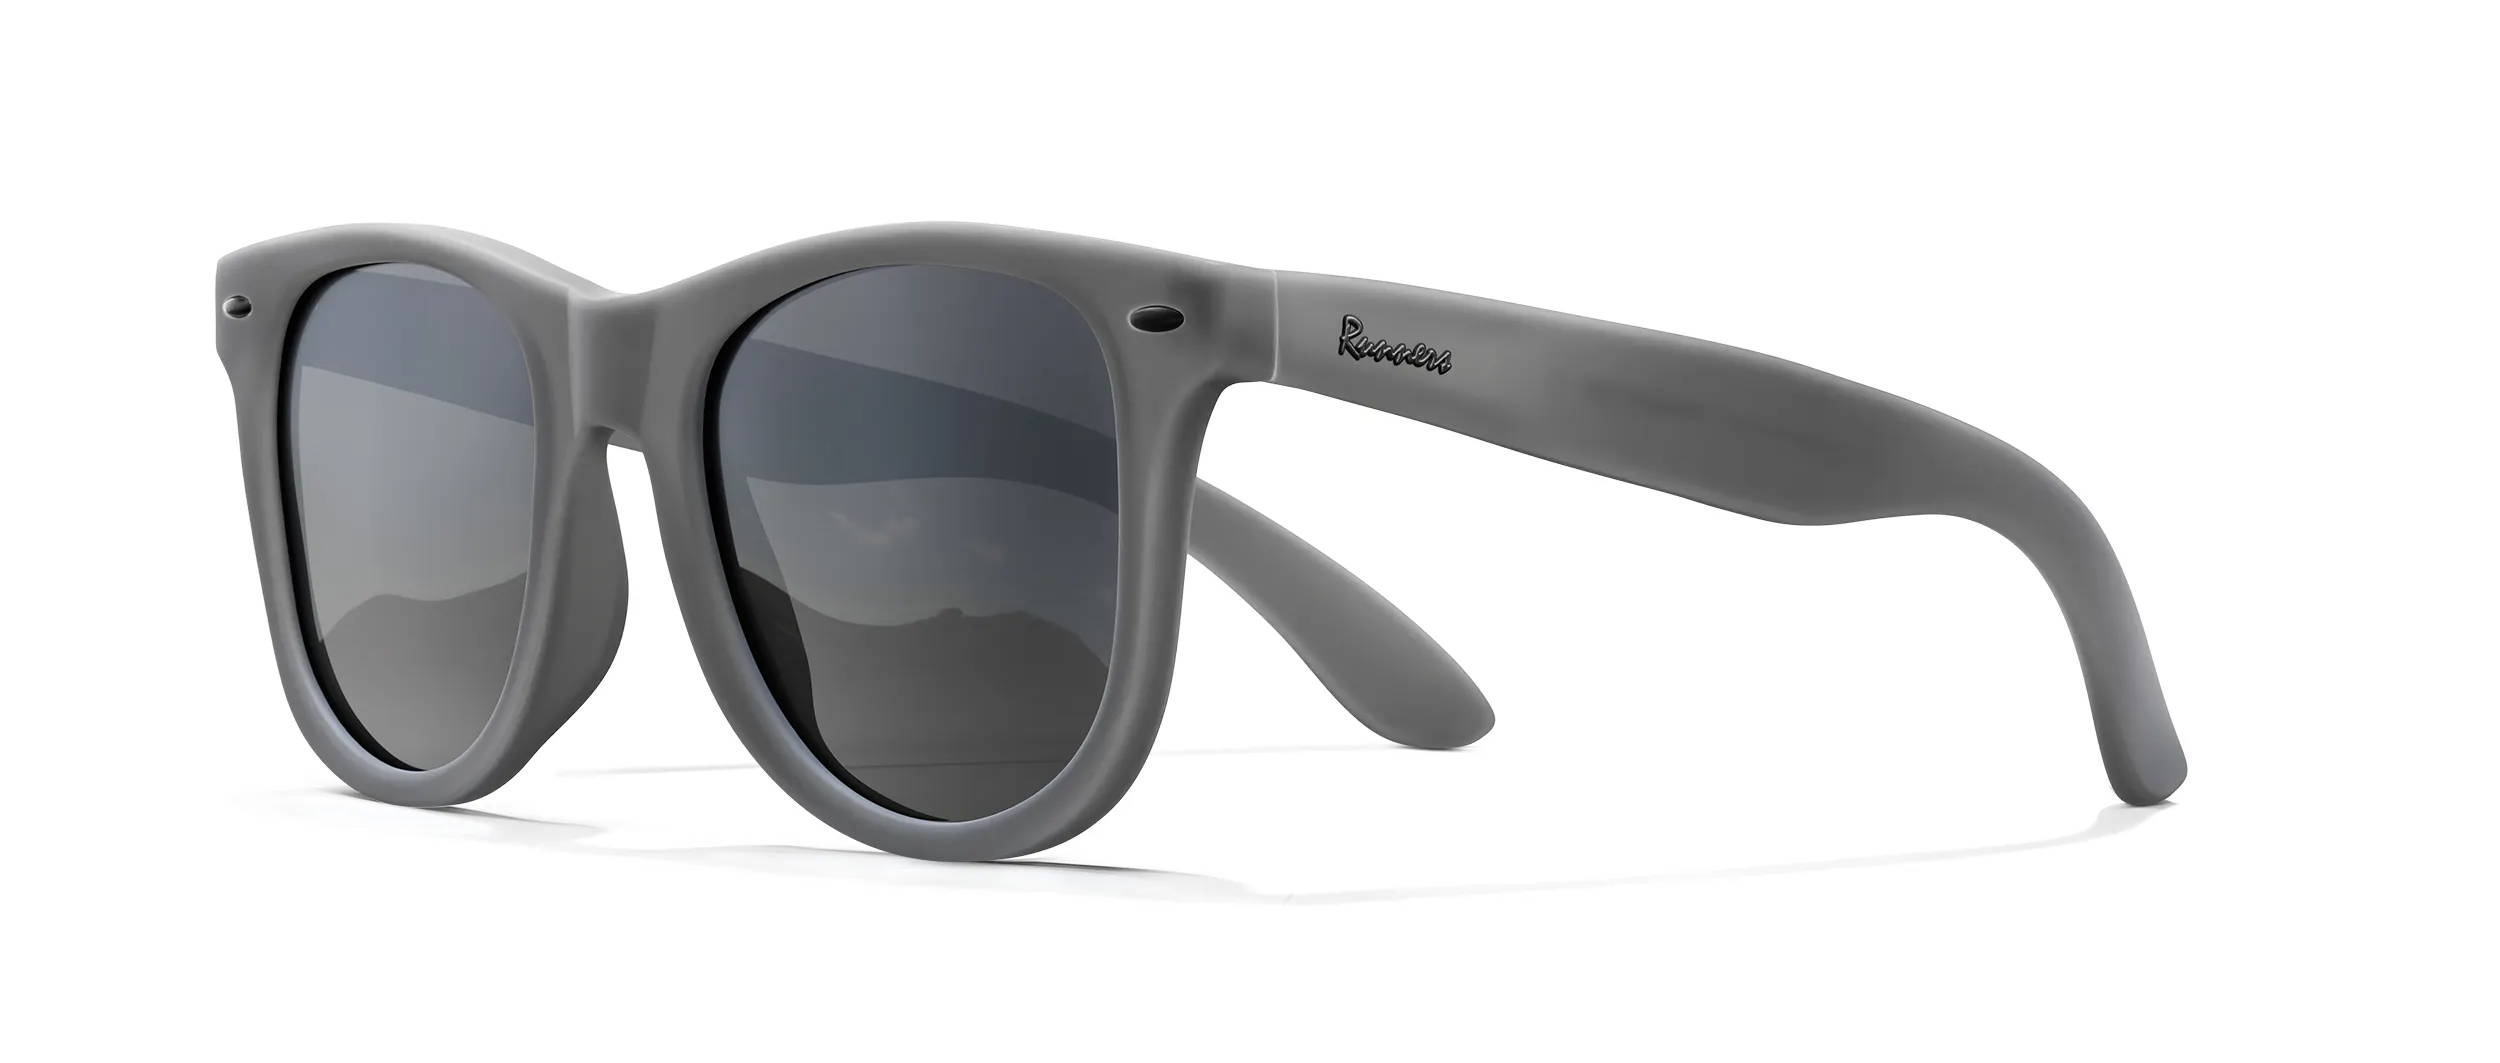 Gray women's sunglasses with gray lenses